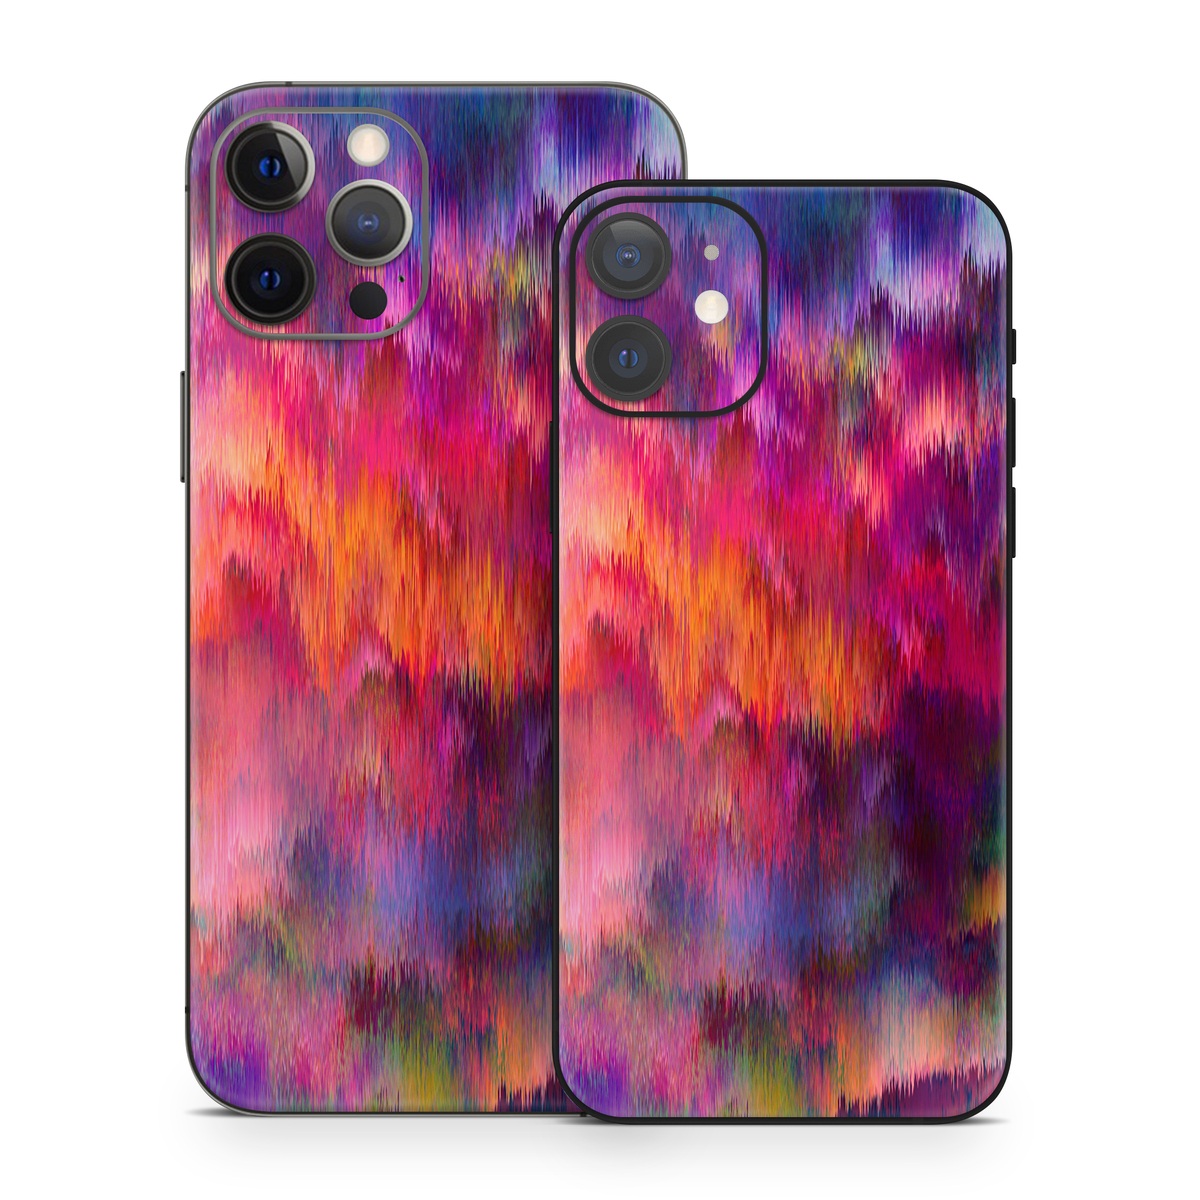 iPhone 12 Series Skin design of Sky, Purple, Pink, Blue, Violet, Painting, Watercolor paint, Lavender, Cloud, Art, with red, blue, purple, orange, green colors